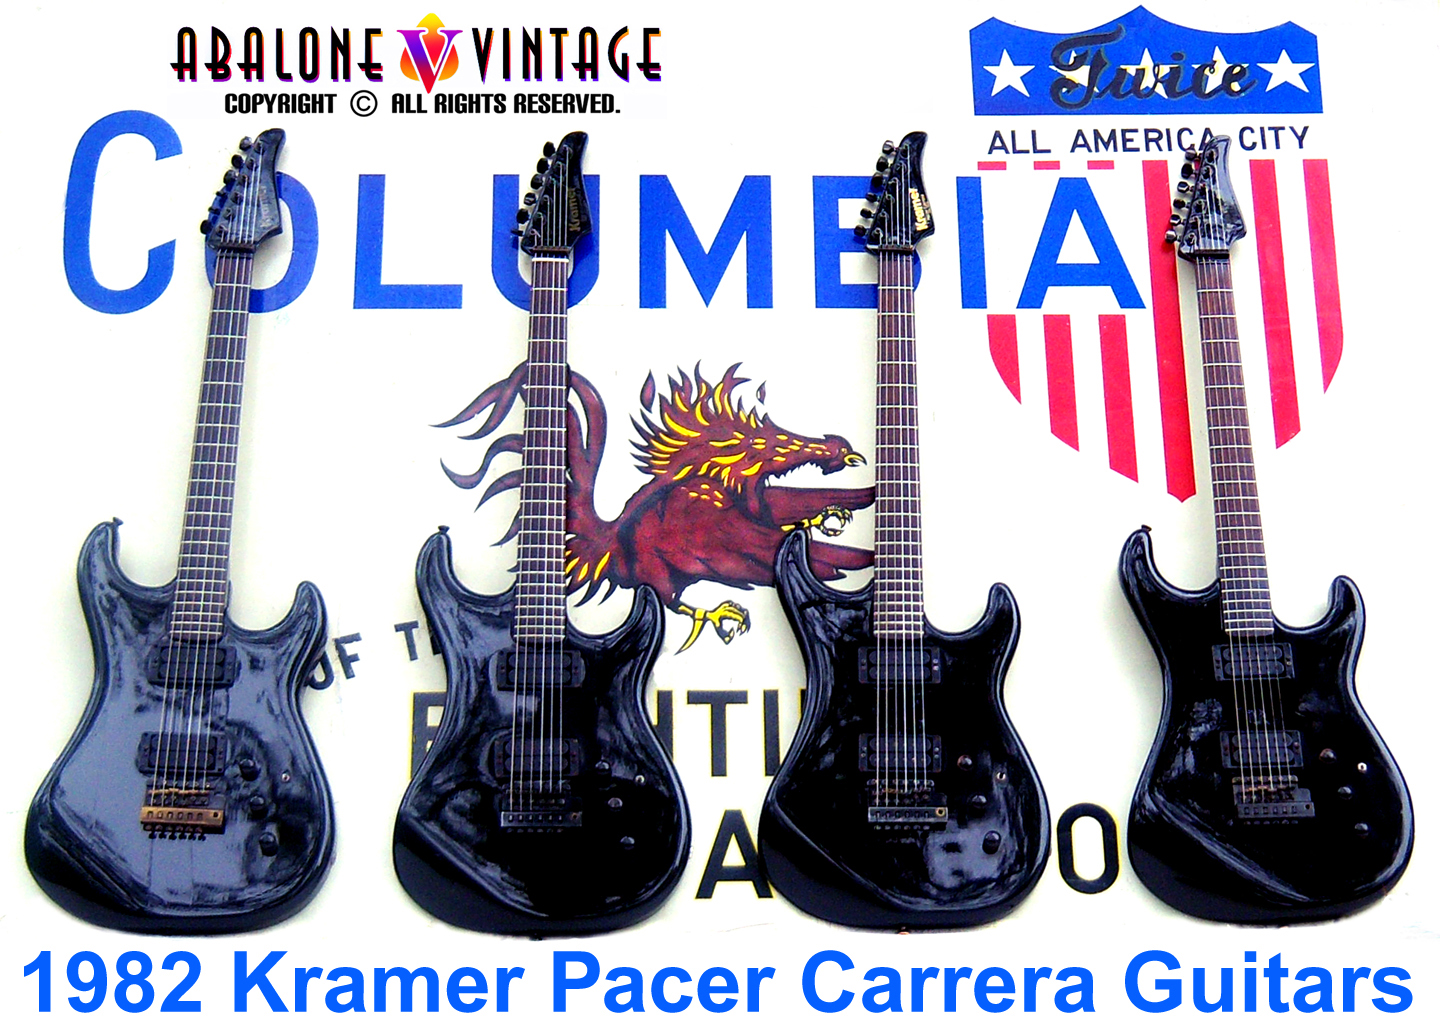 Kramer Pacer Carrera guitars 1982